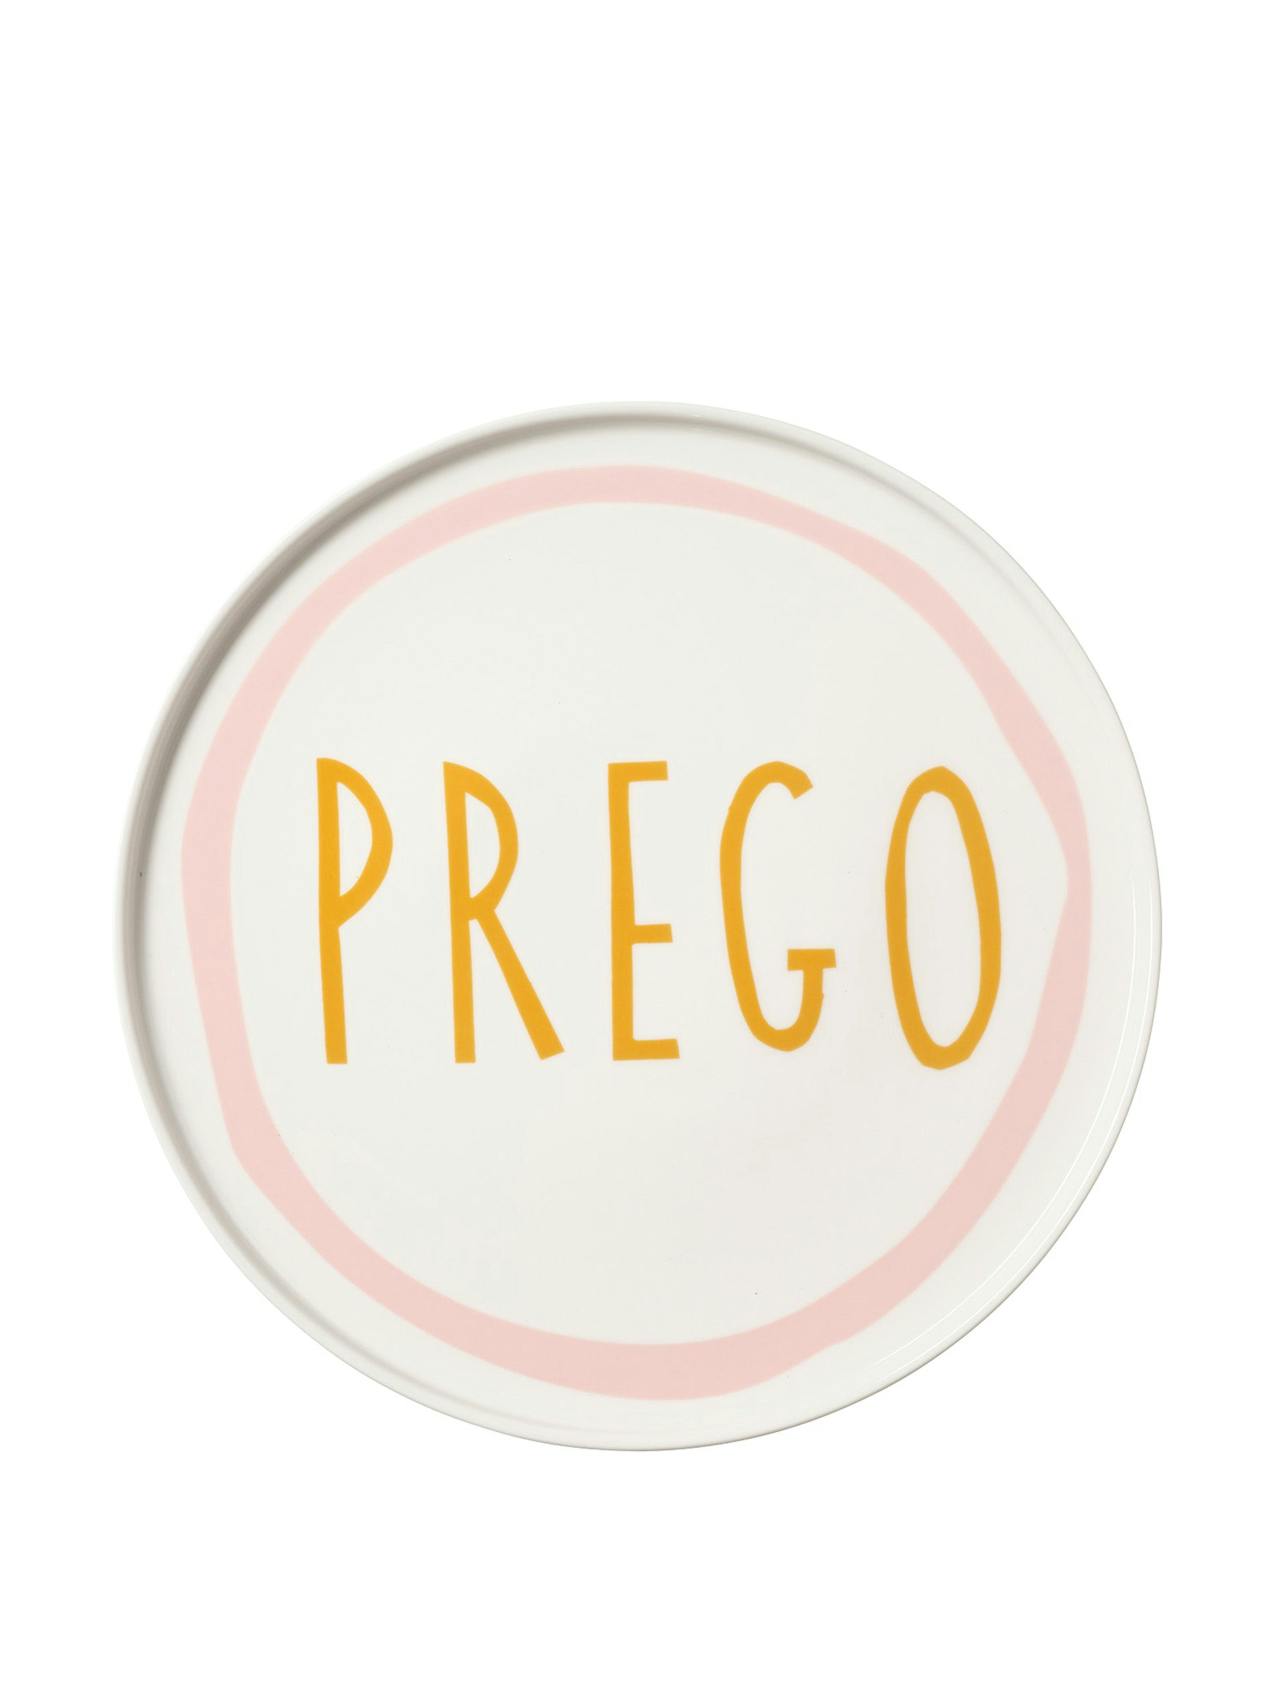 Prego plate